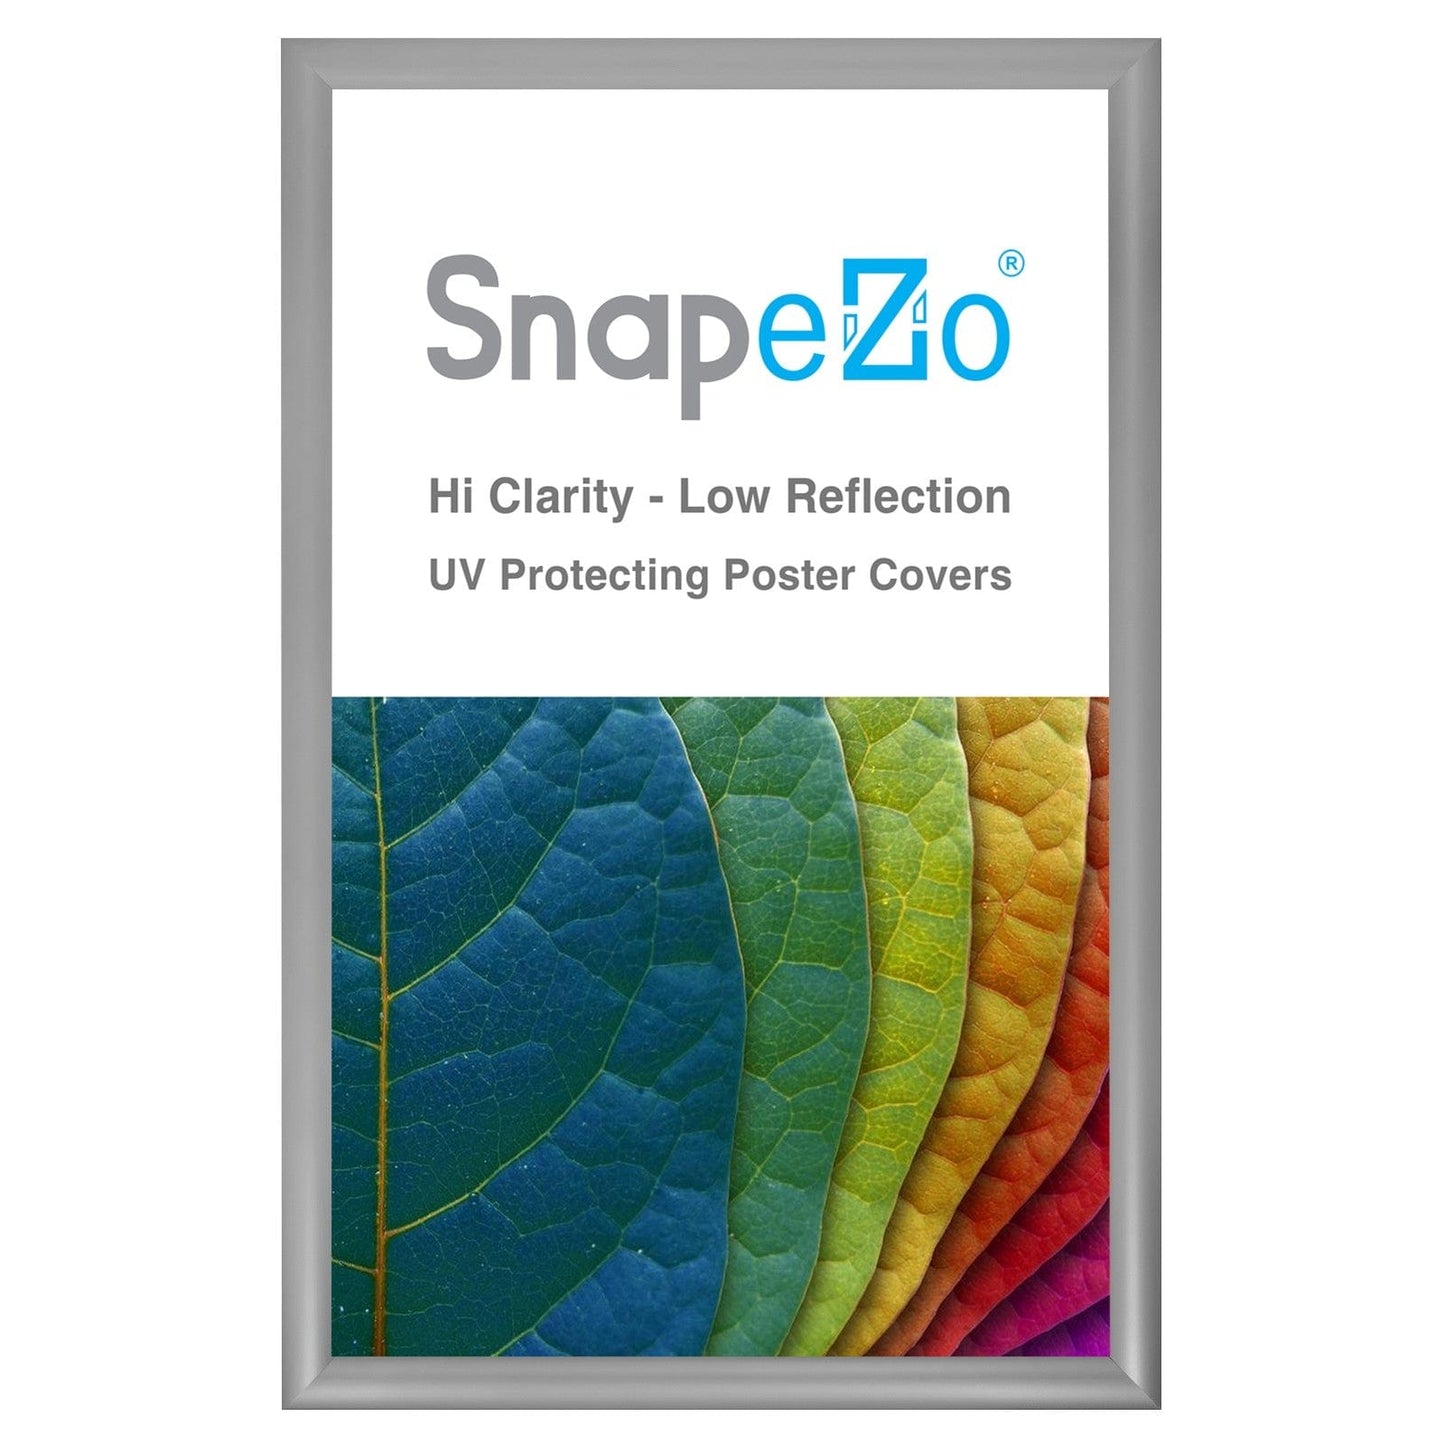 15x24 Silver SnapeZo® Snap Frame - 1.2" Profile - Snap Frames Direct